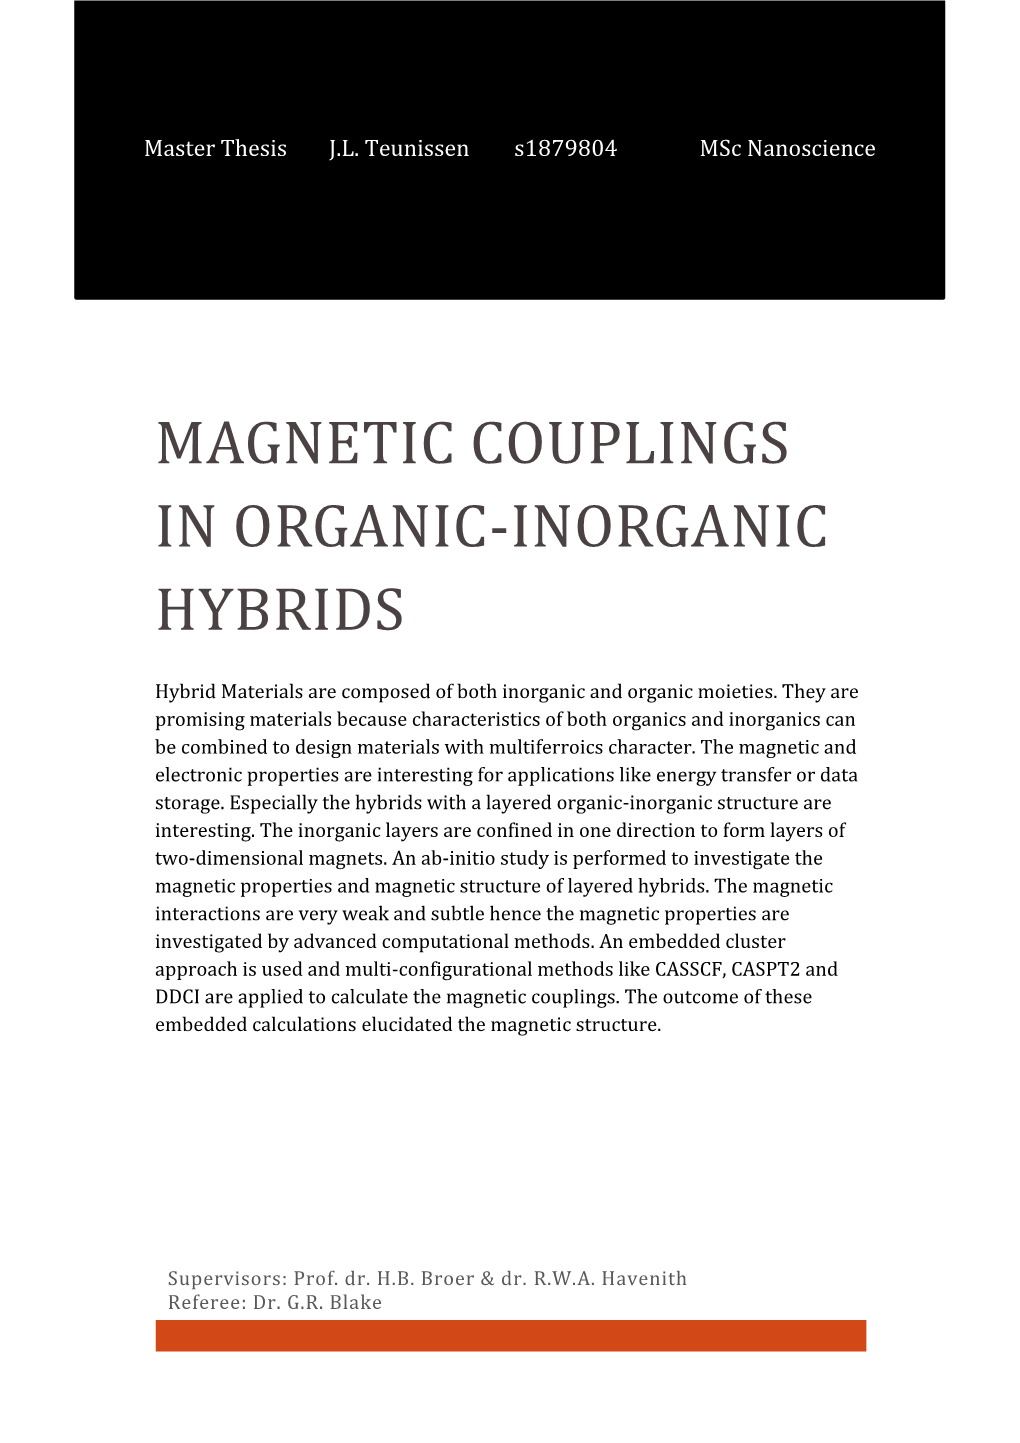 Magnetic Couplings in Organic-Inorganic Hybrids